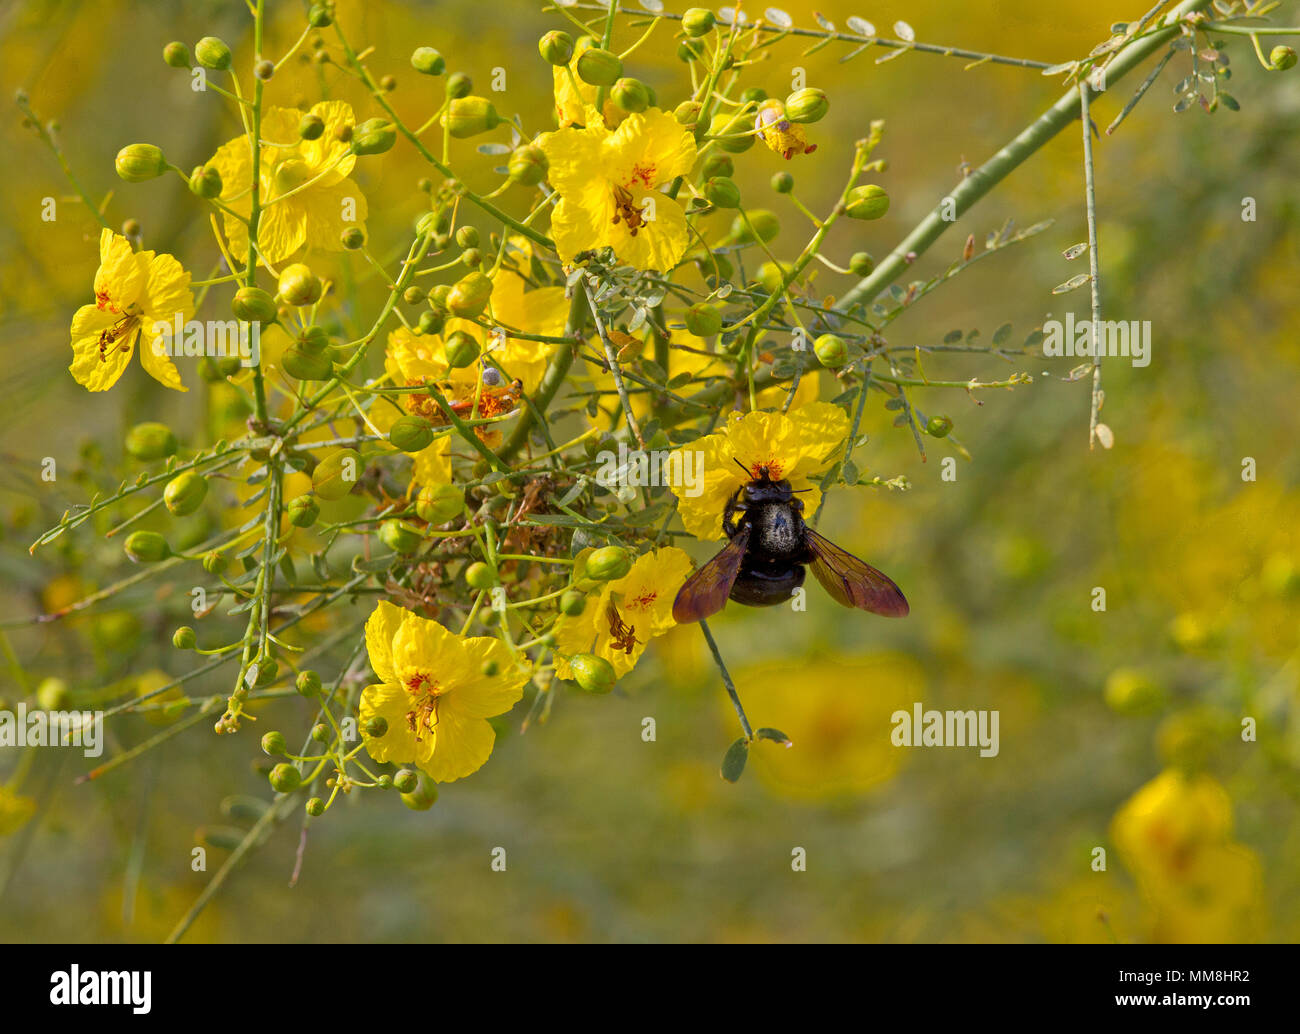 Black Bumble Bee on Yellow Flower Stock Photo